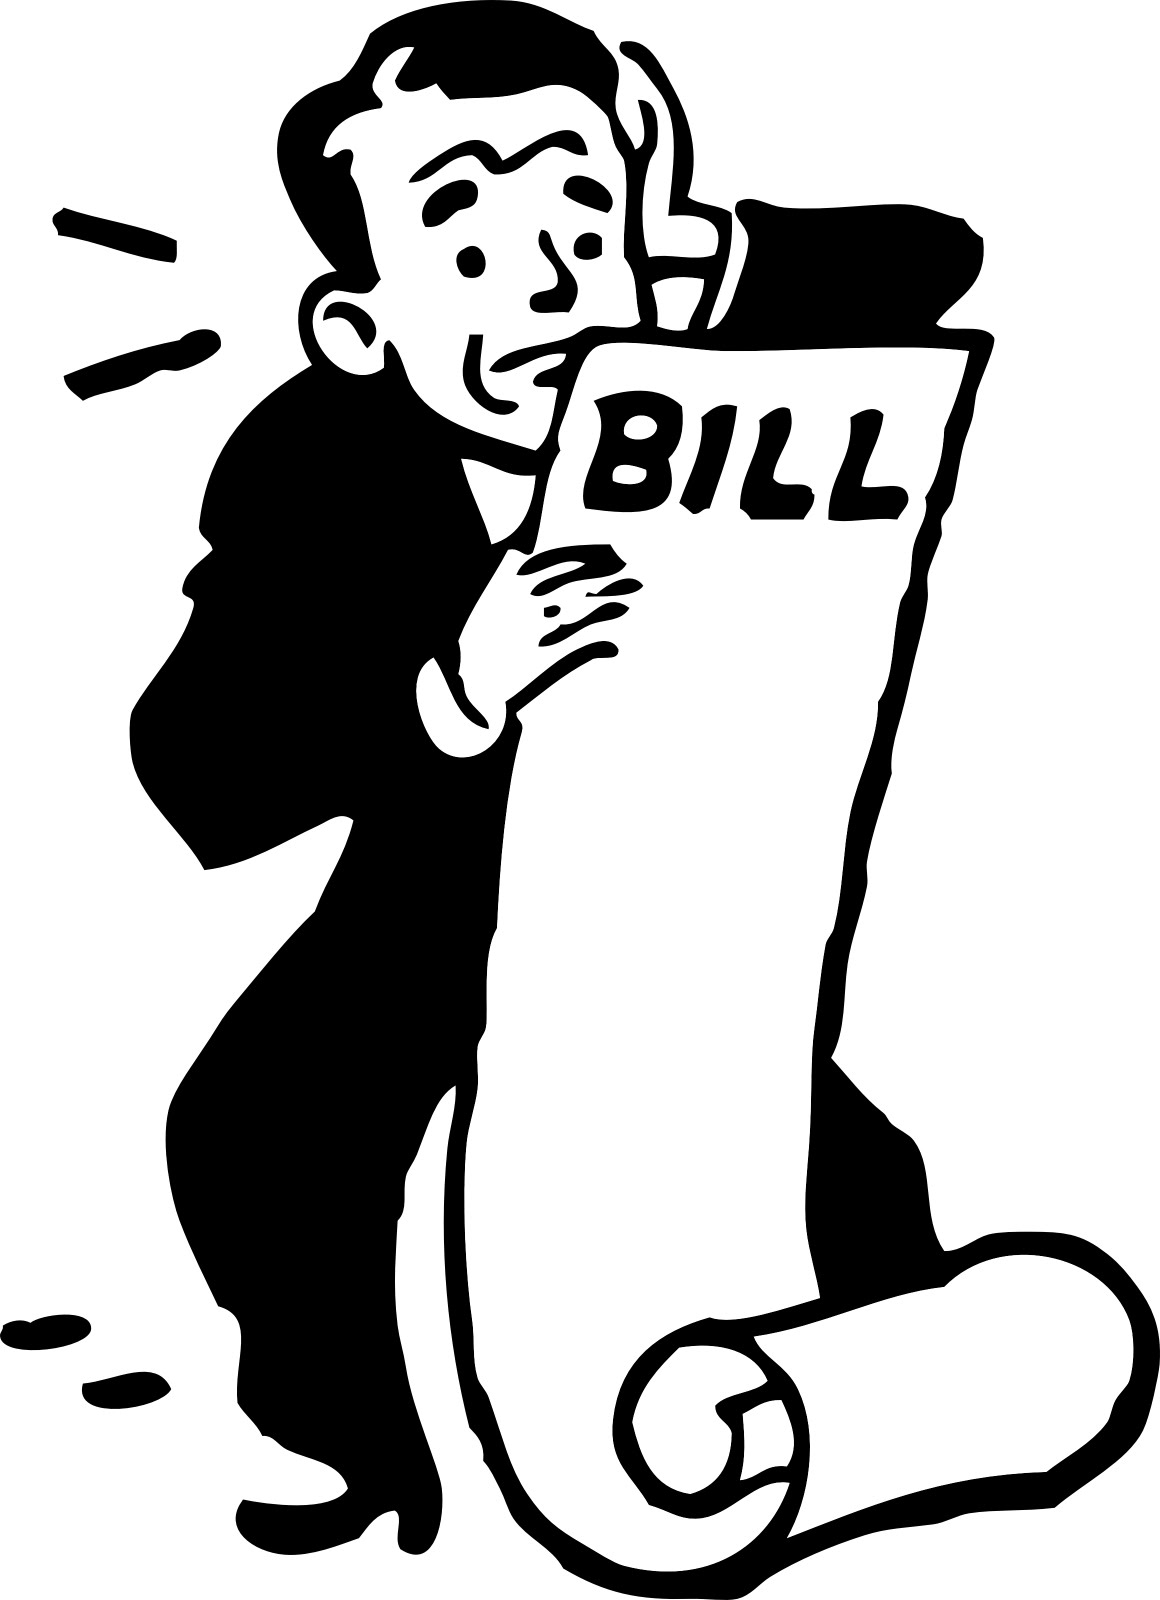 Bills clipart utility bill. Free cliparts download clip